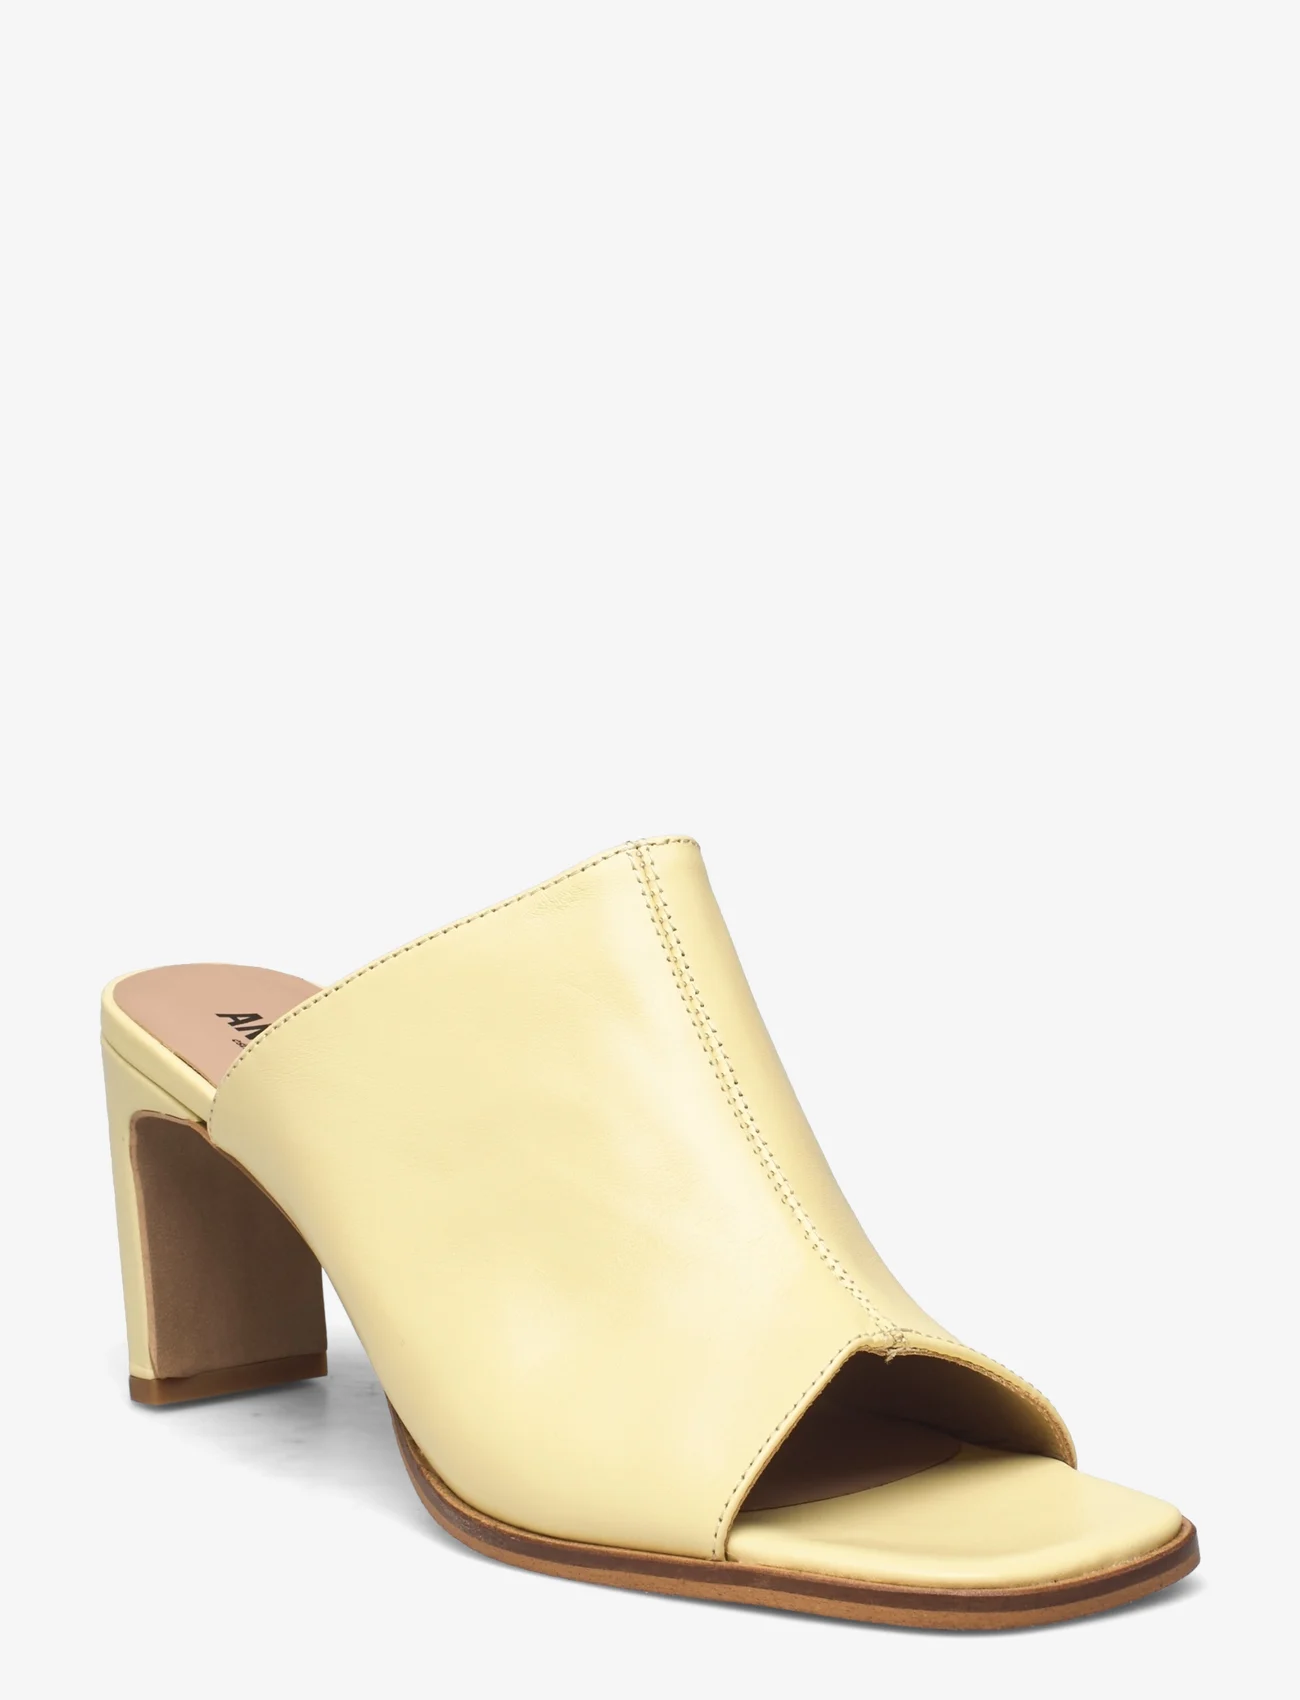 ANGULUS - Sandals - Block heels - pantoletten mit absätzen - 1495 light yellow - 0